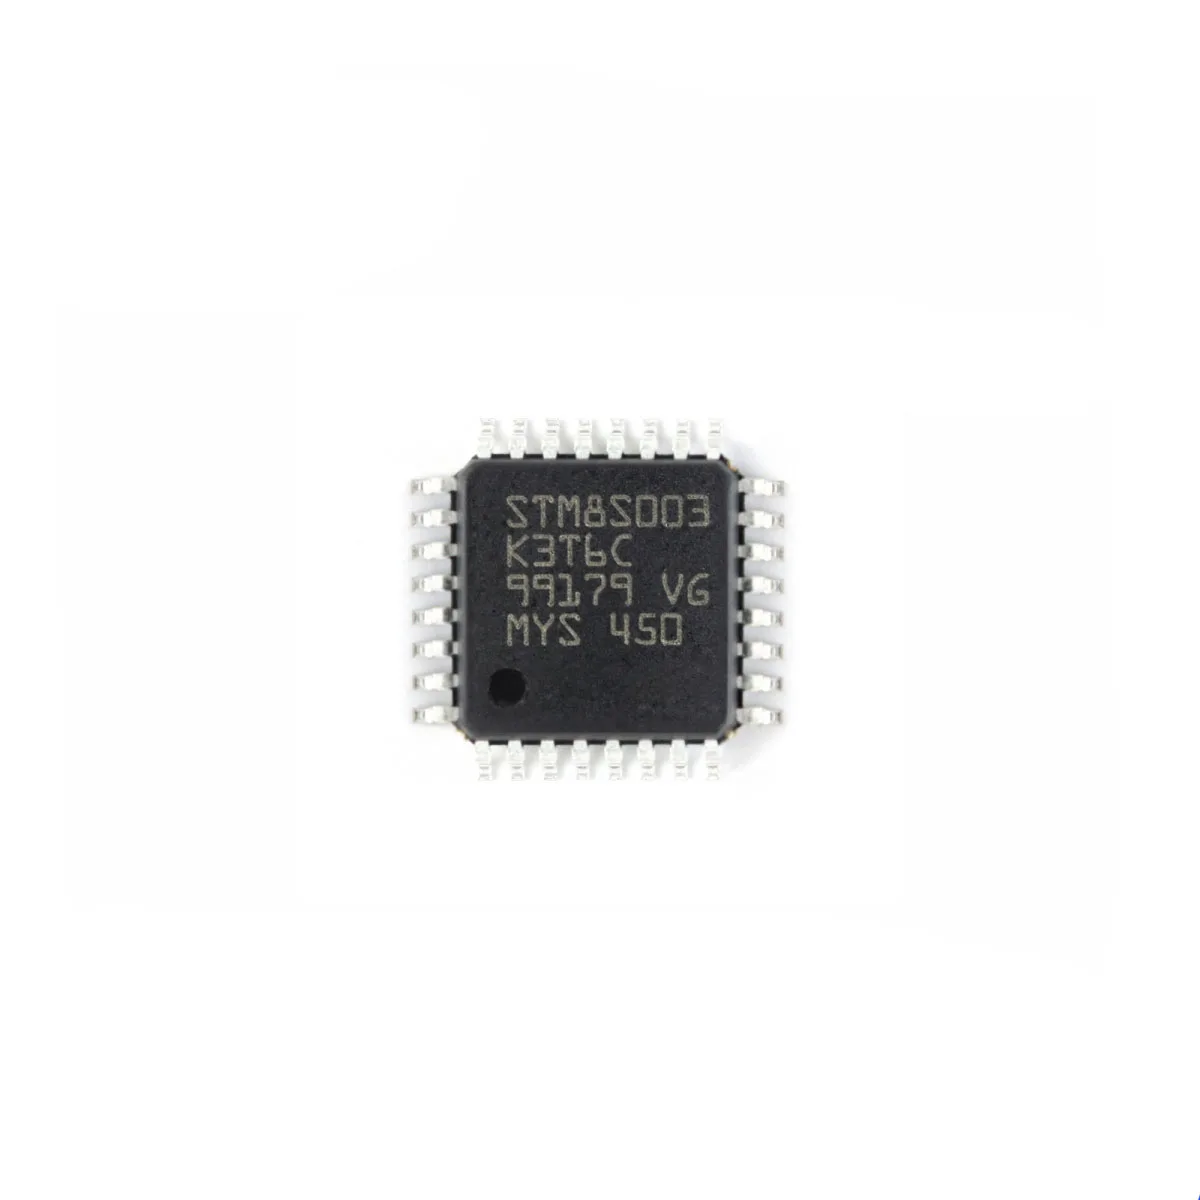 

Original STM8S003K3T6C LQFP32 8-bit microcontroller chip IC STM8S003 MCU 16 MHZ / 8 KB flash memory IC LQFP-32 Microcontroller